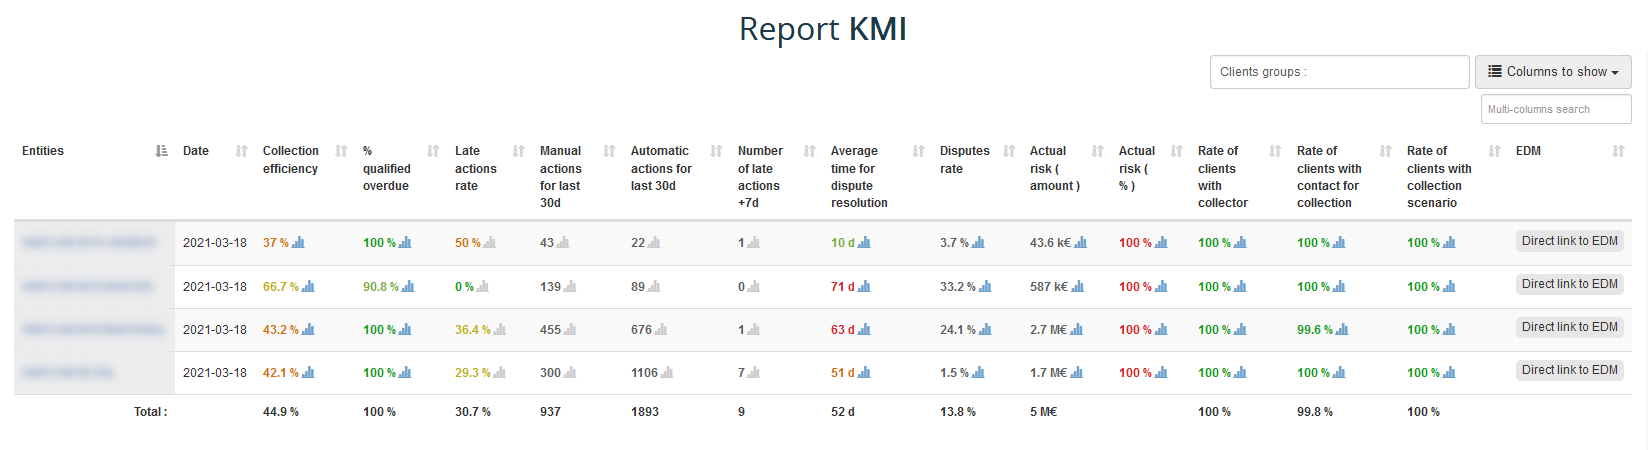 KMI report